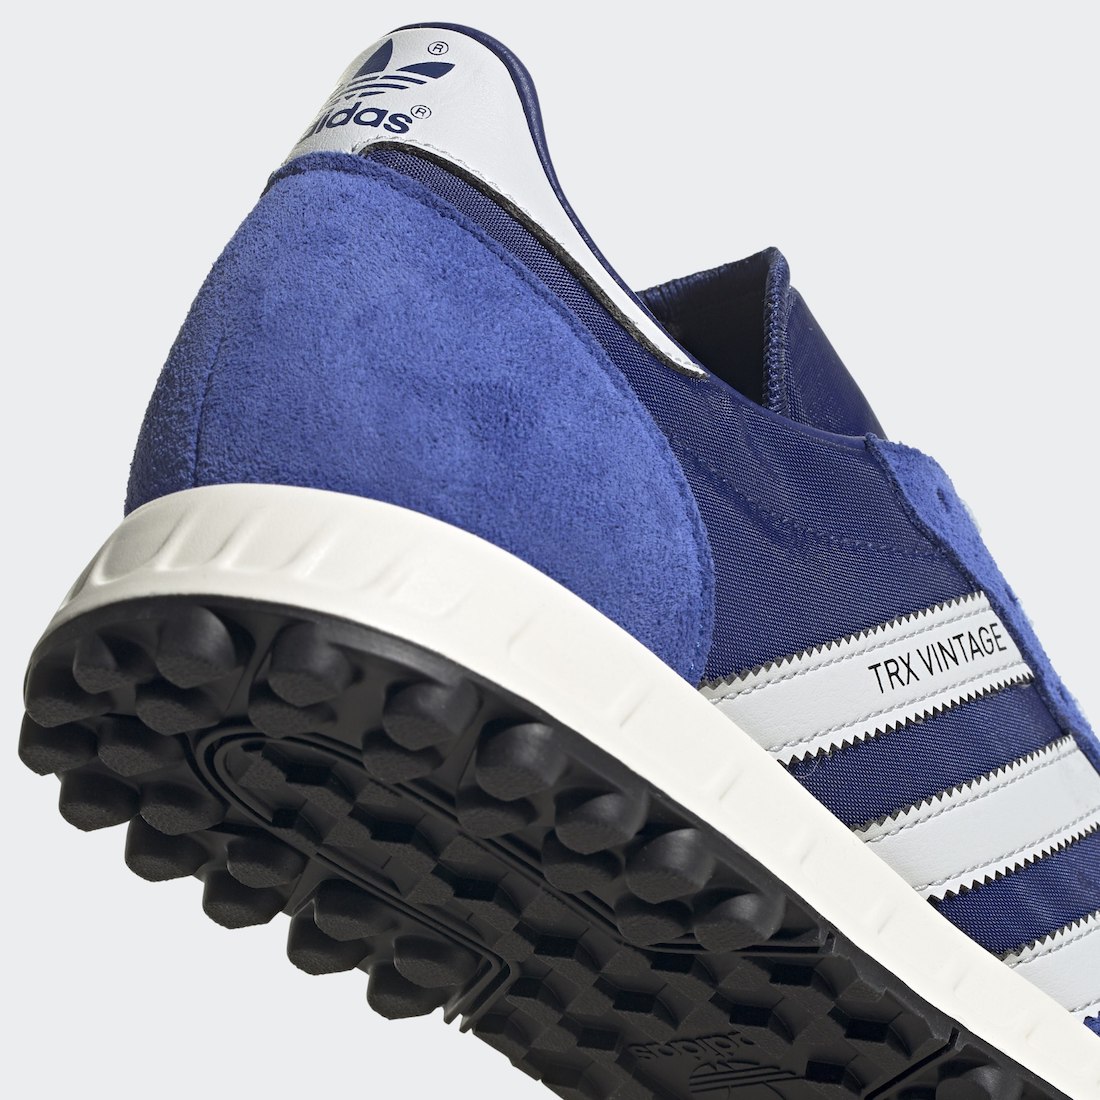 adidas TRX Vintage Blue Grey White FY3651 Release Date Info